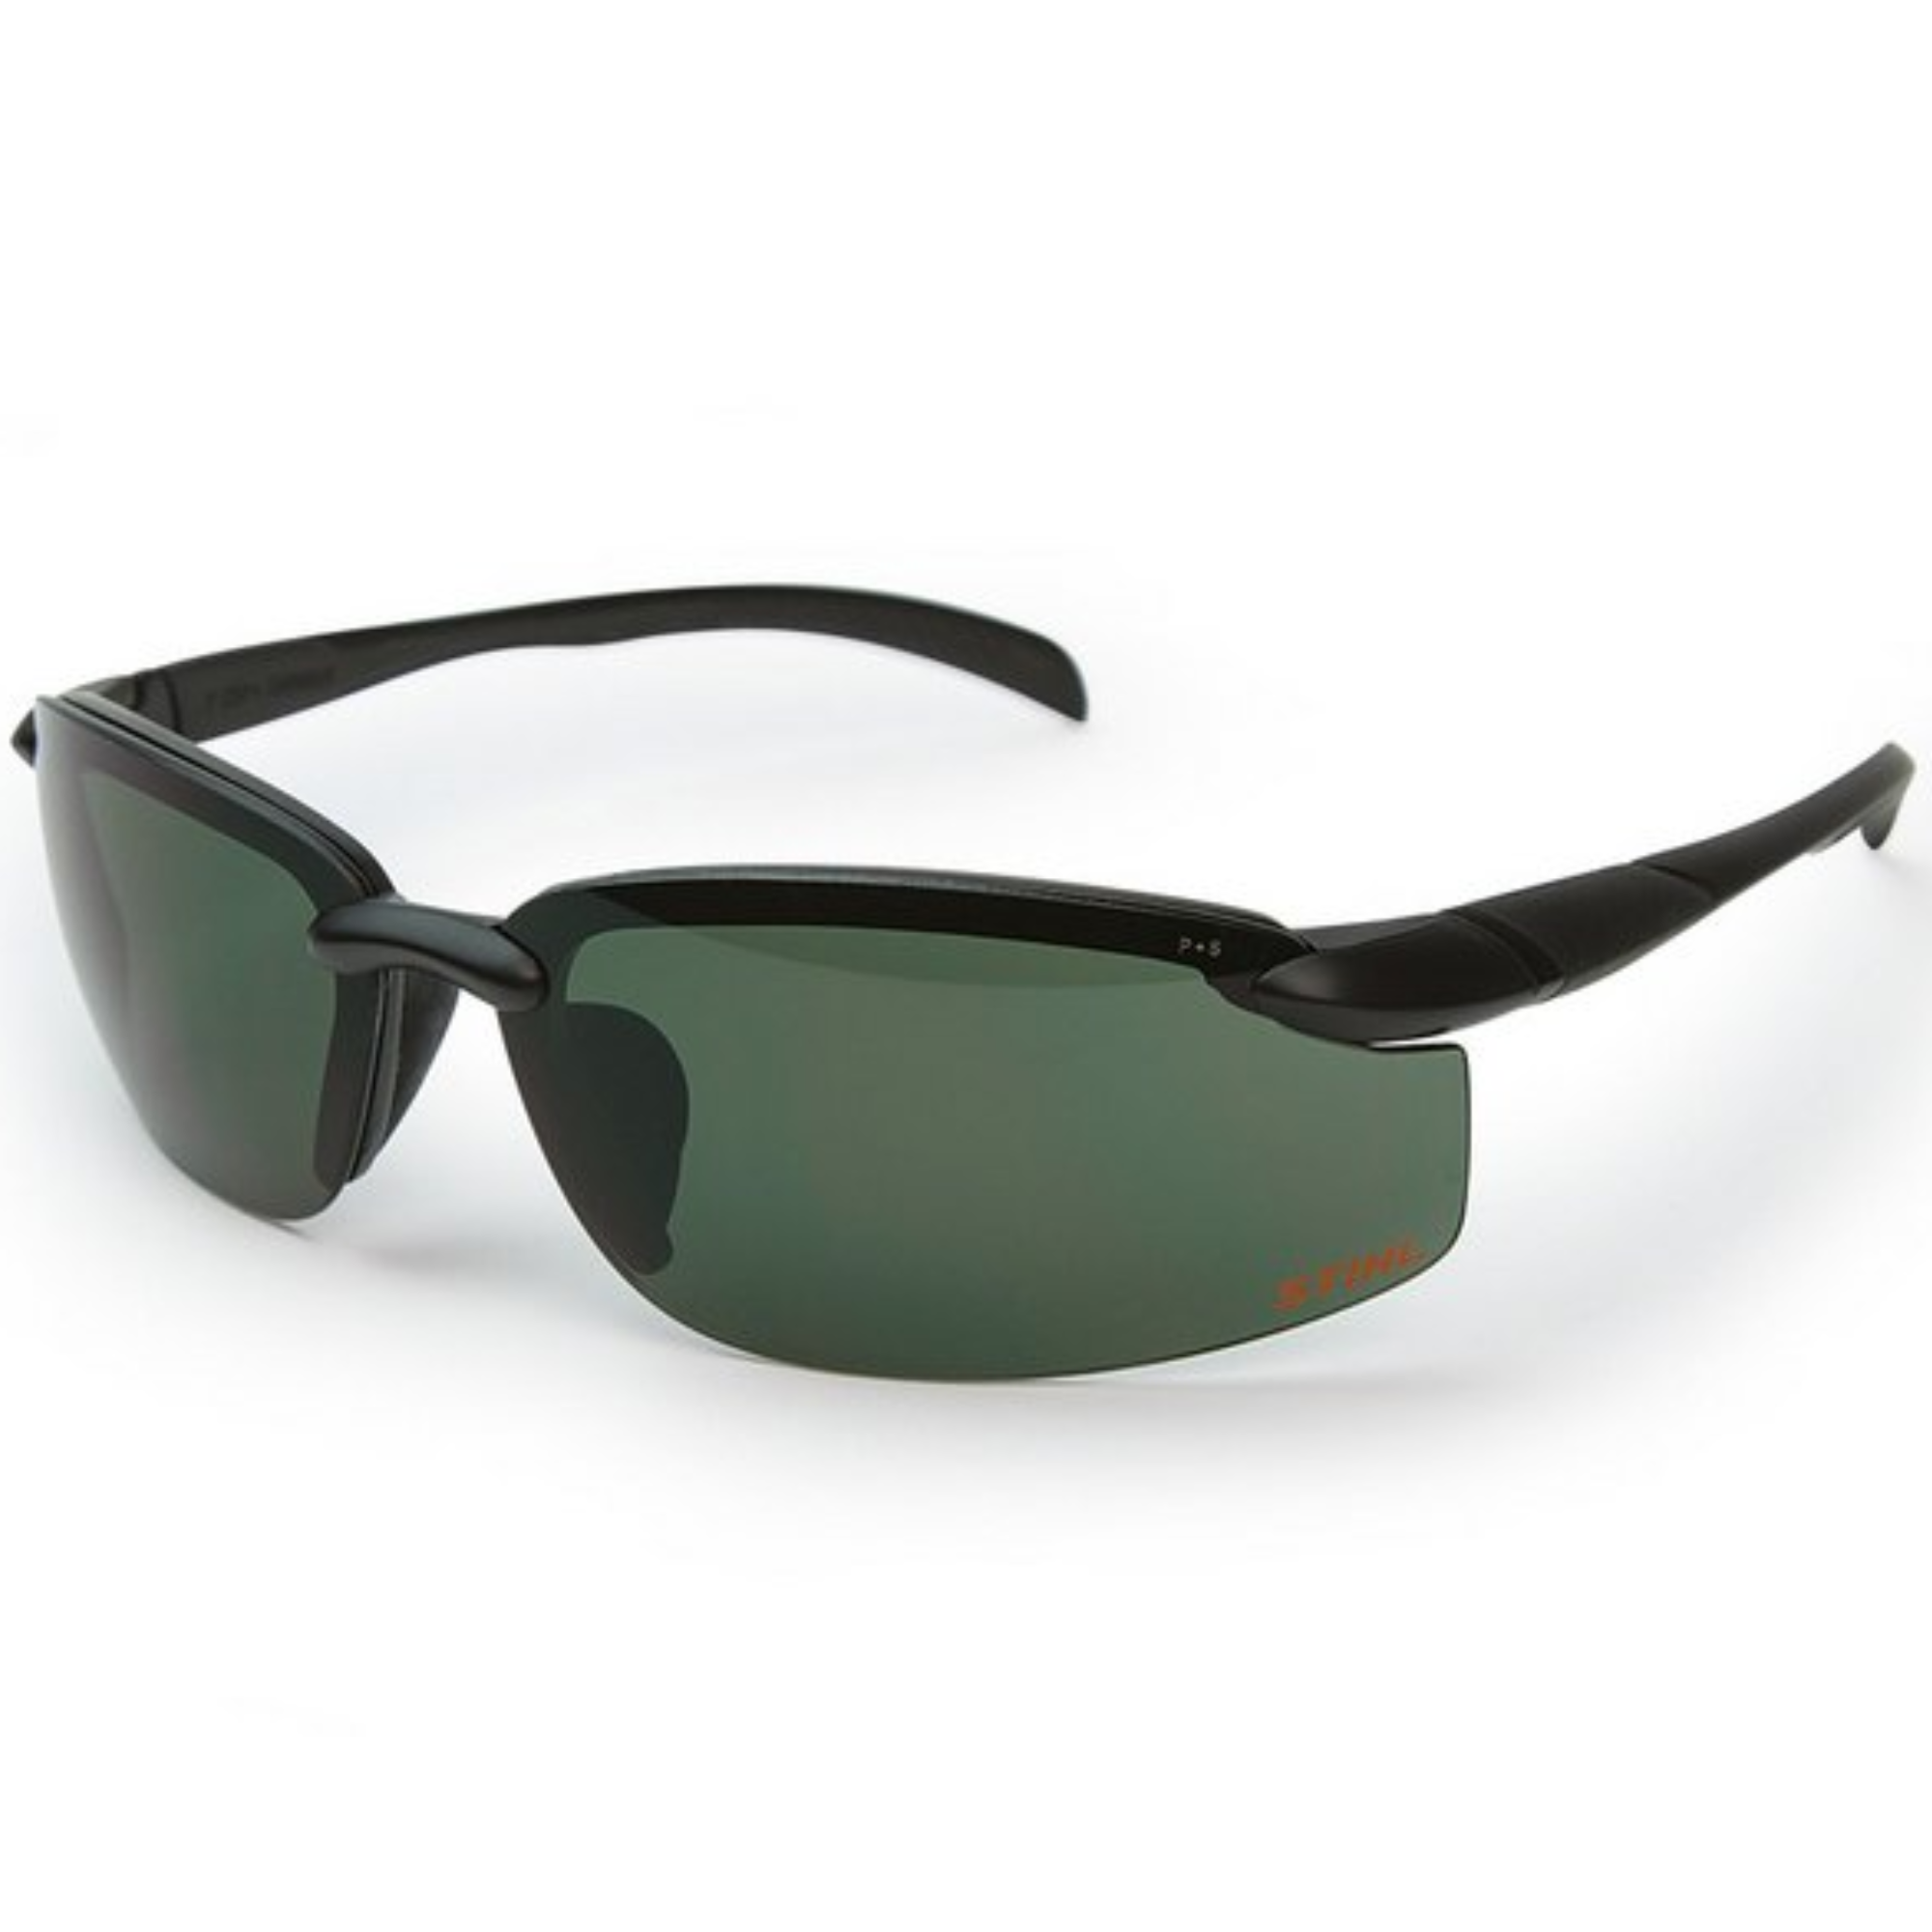 Stihl Deputy II Safety Glasses | Forest Gray Lens | 7010 884 0396